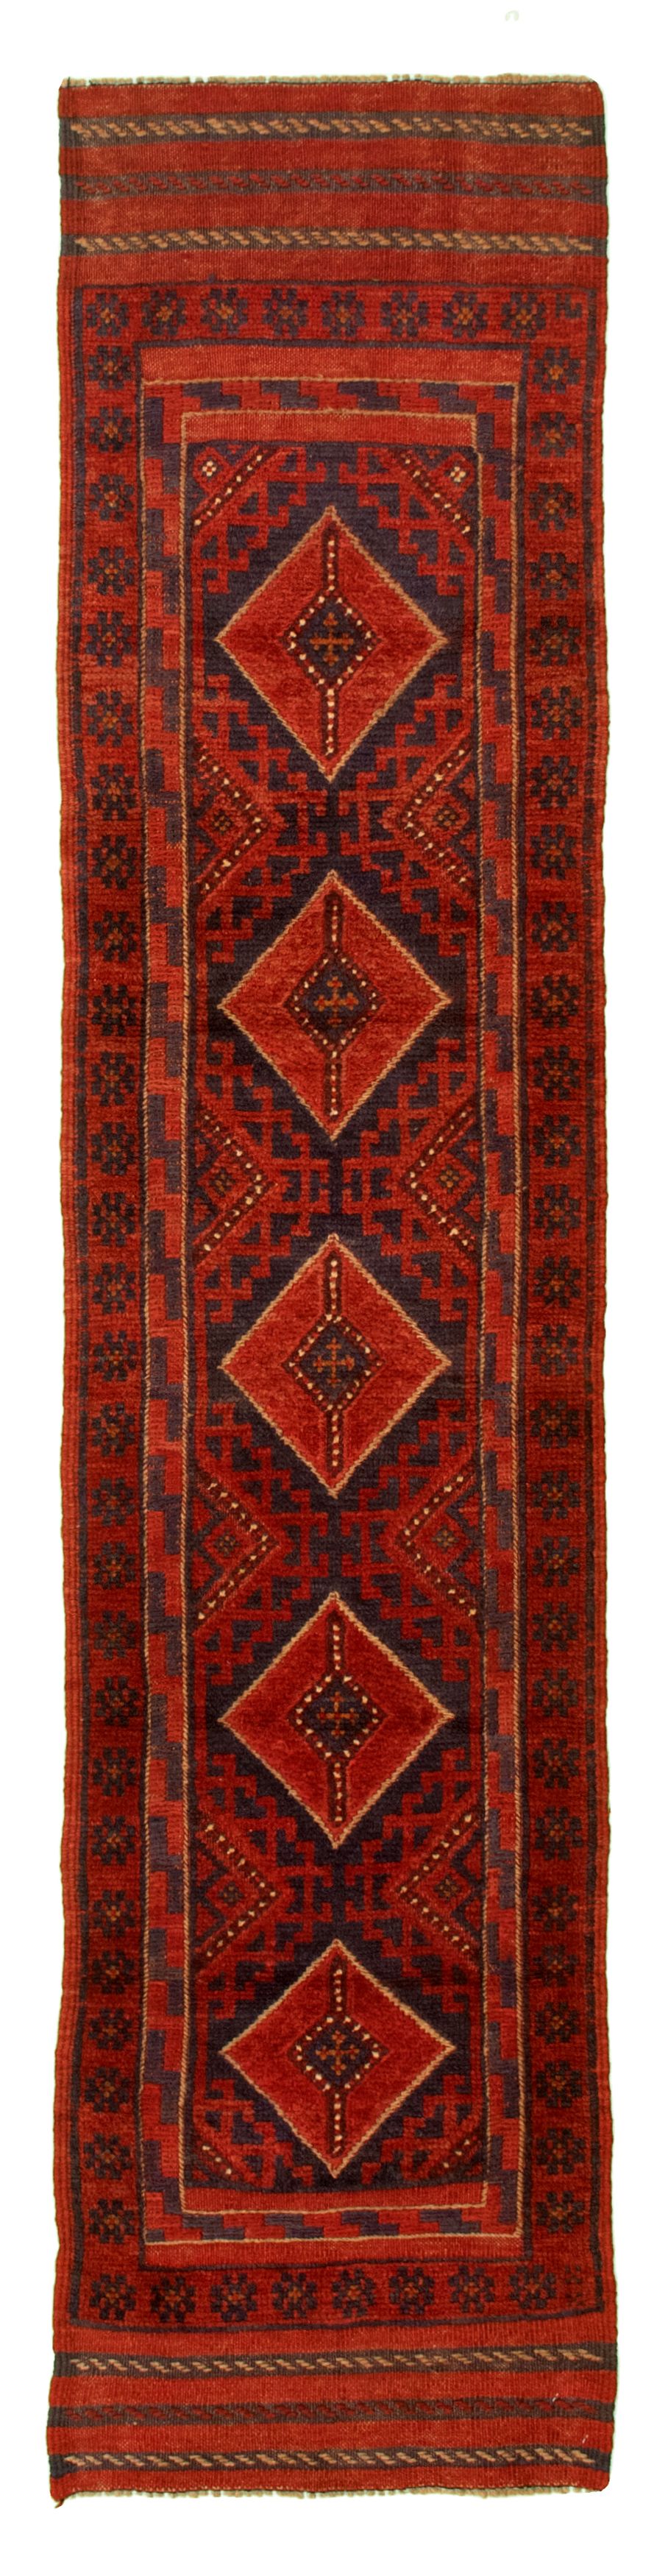 Hand-knotted Tajik Caucasian Red Wool Rug 1'10" x 8'6"  Size: 1'10" x 8'6"  